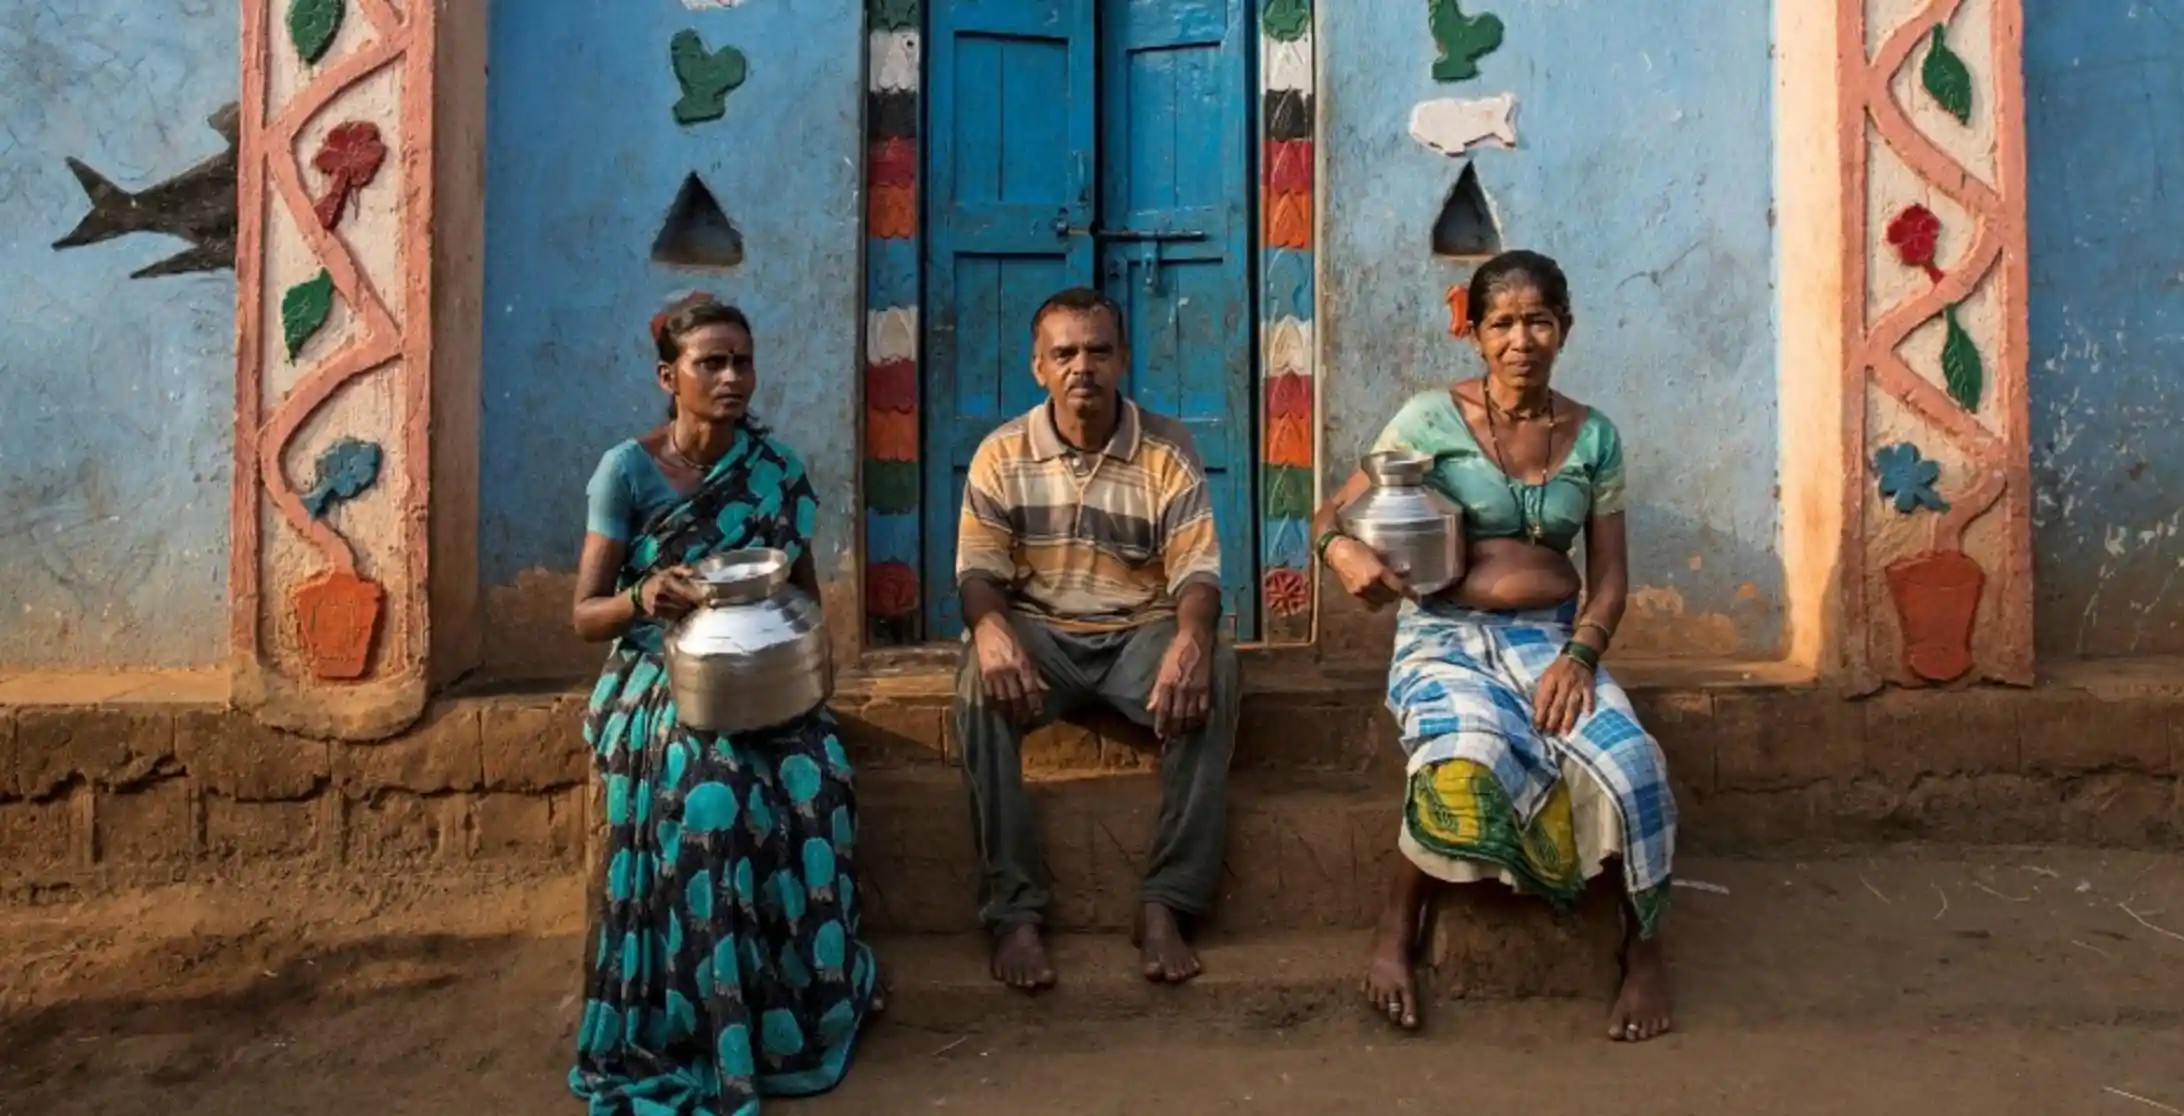 Water and humanitarian crisis in Denganmal- Water Wives. Image source: India Times